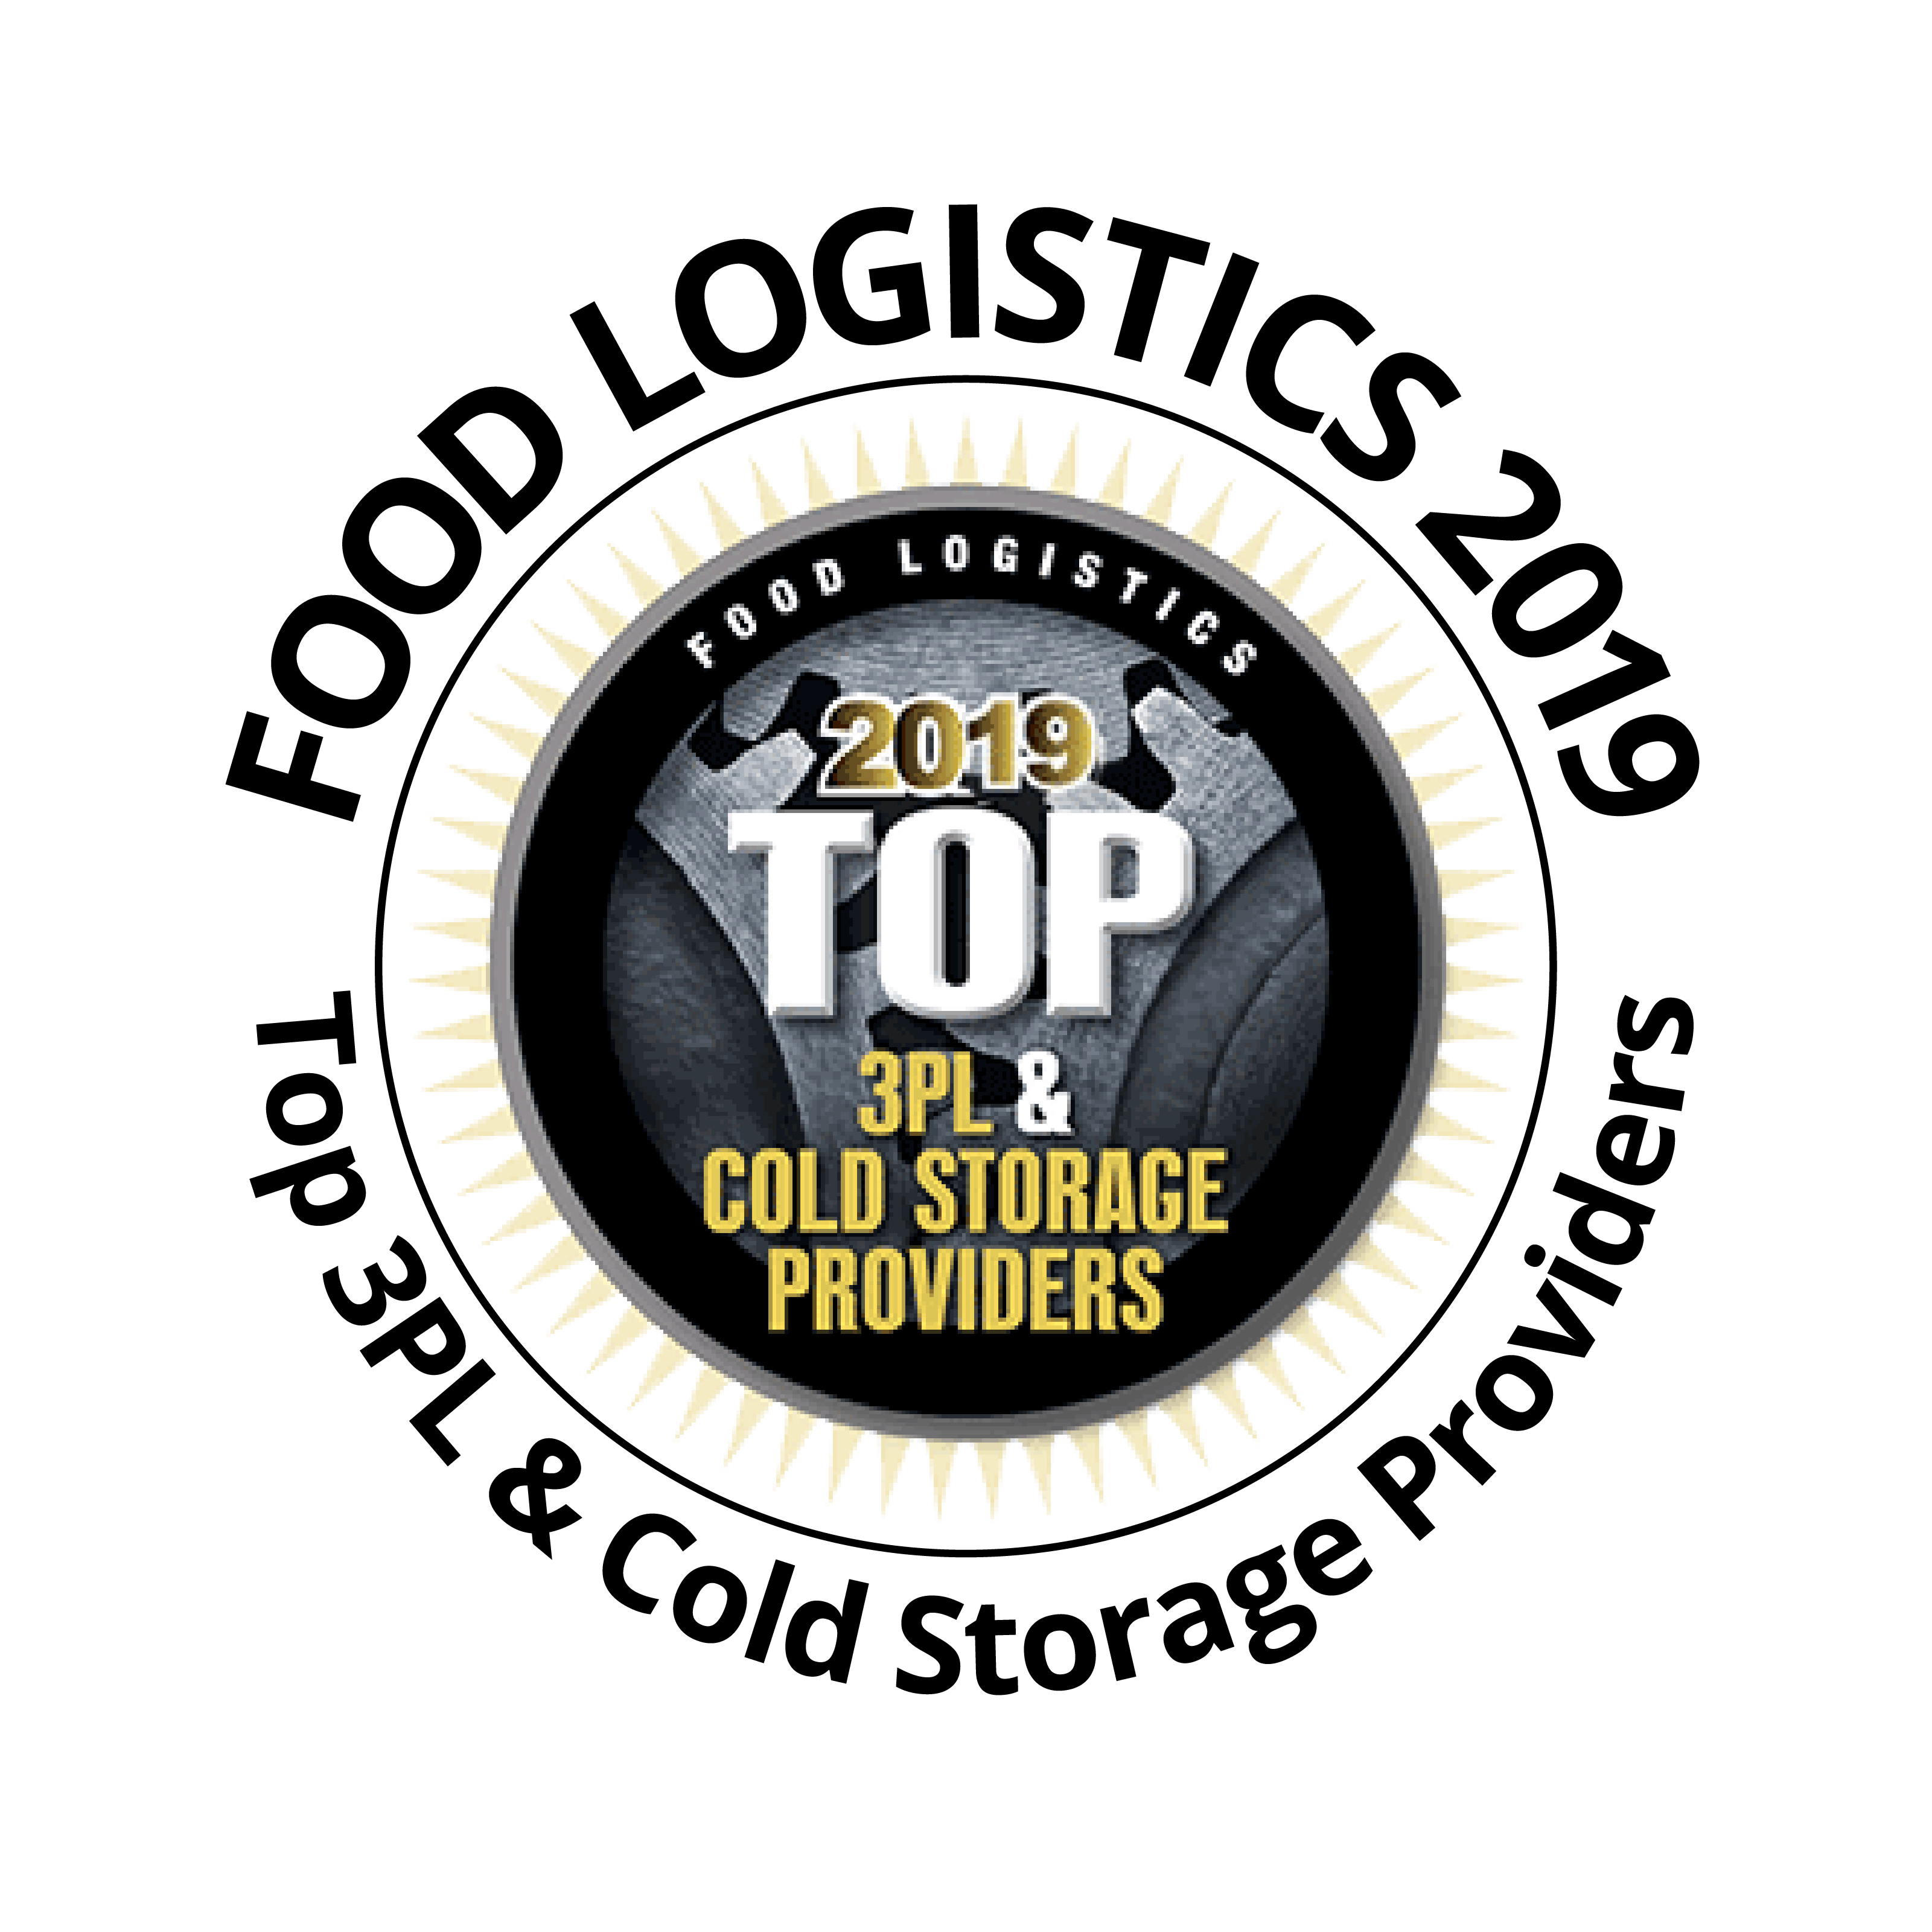 Food Logistics 2019 Top 3PL & Cold Storage Providers